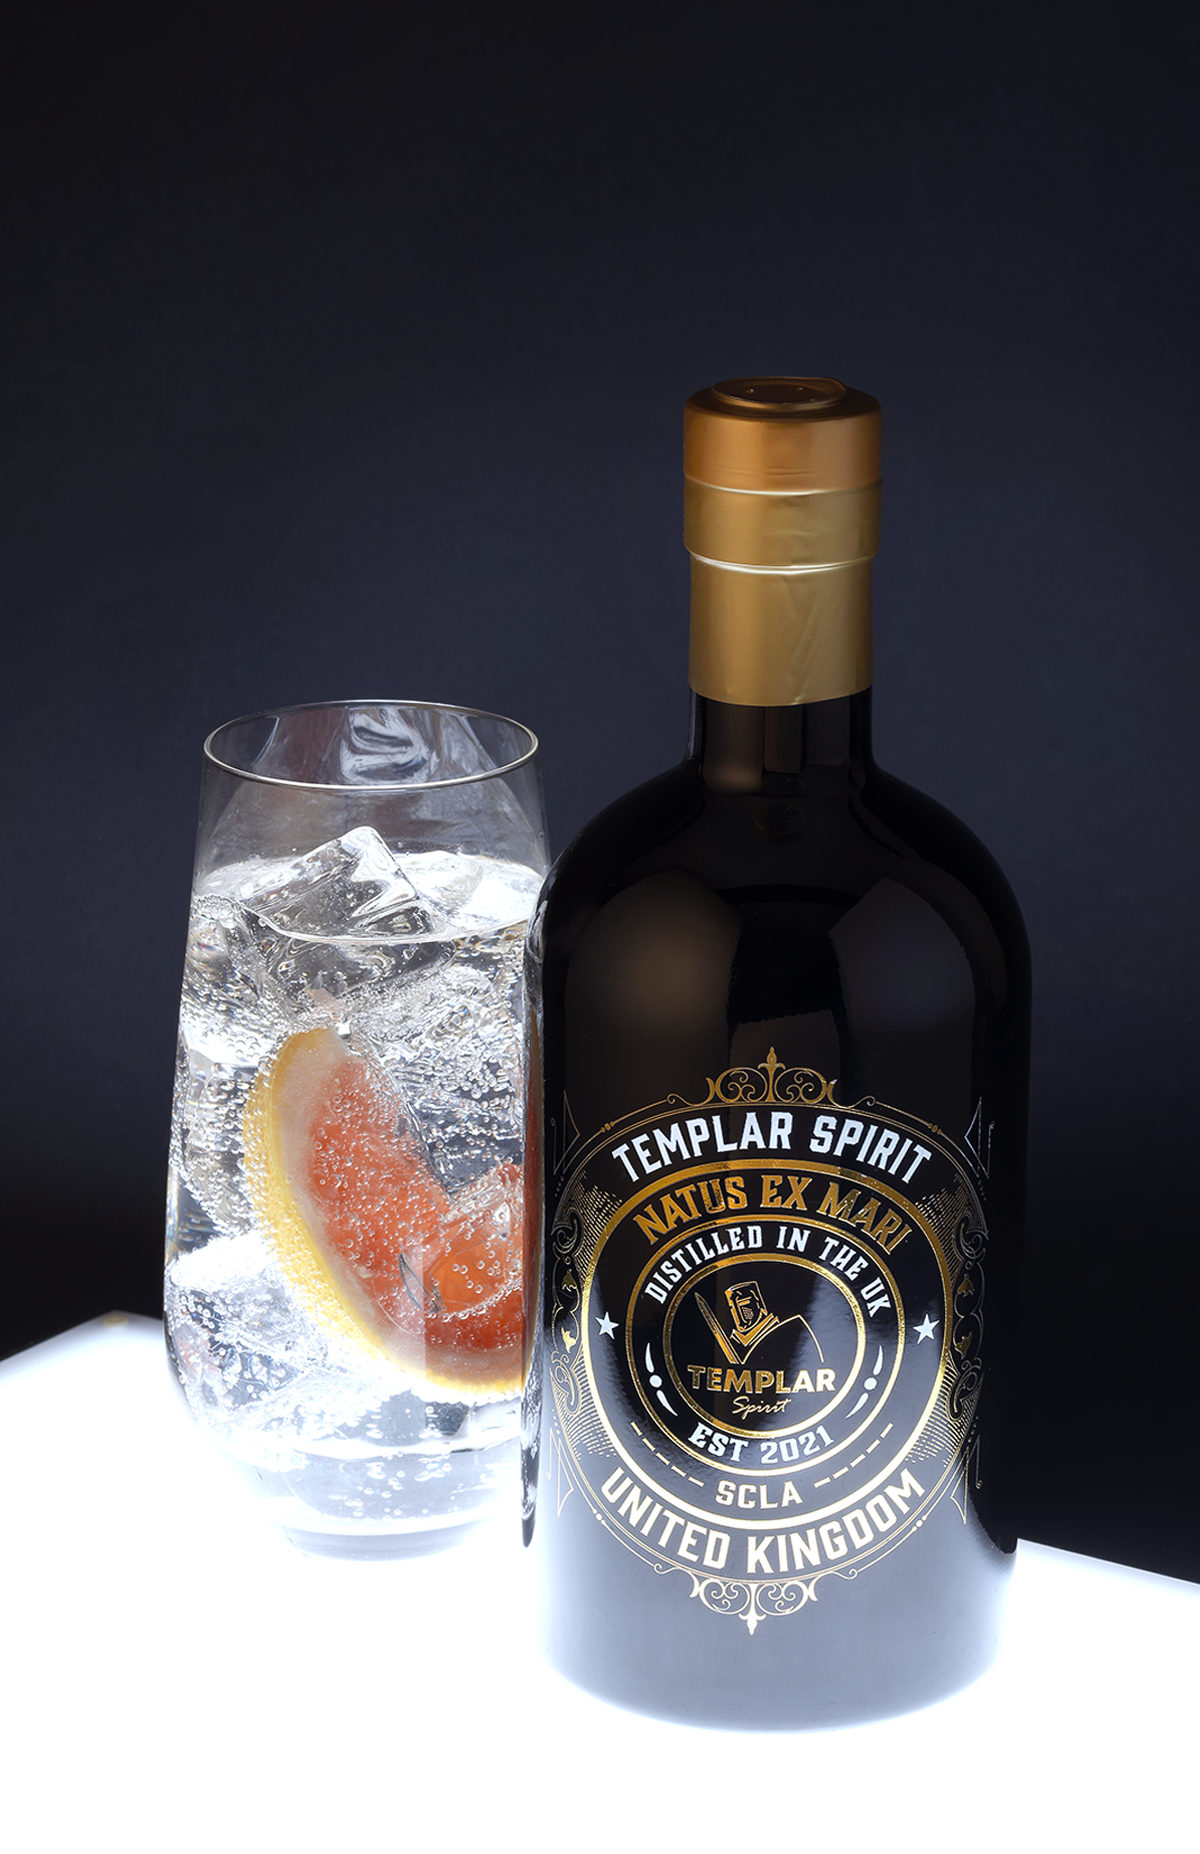 Templar Navy Strength Classic London Dry Gin